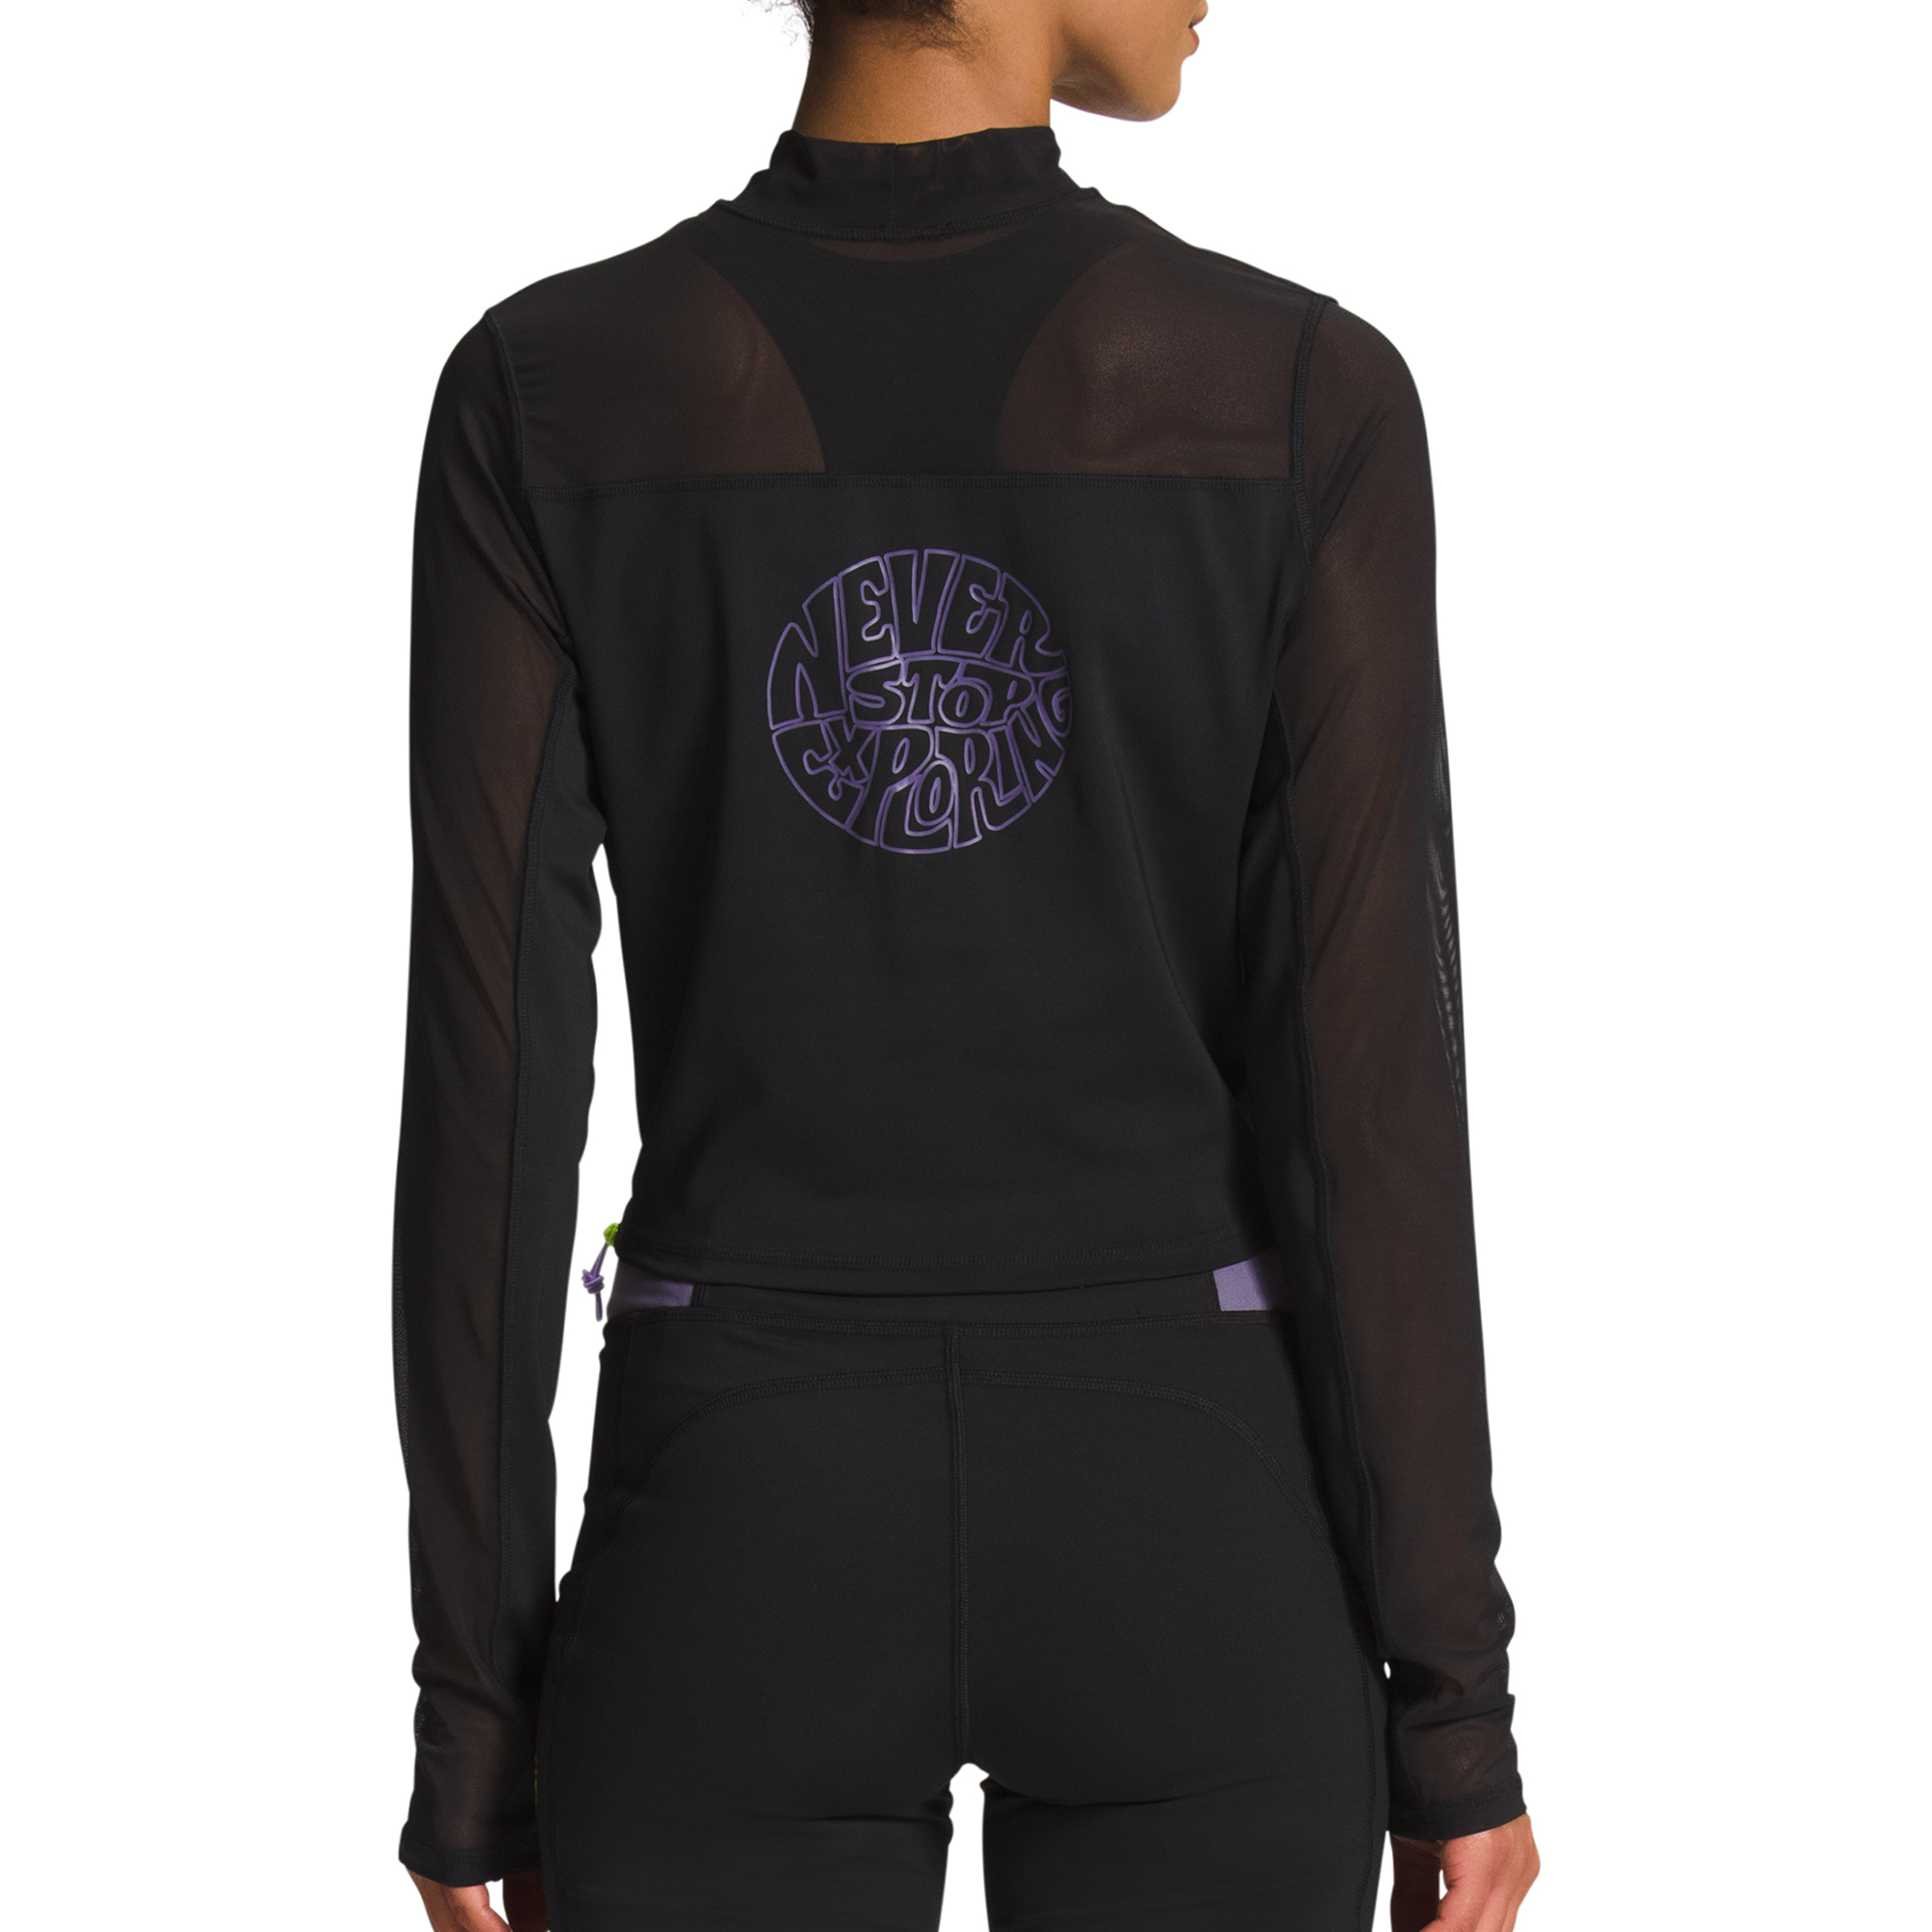 The North Face Womens Trailwear QTM Mock Neck Long Sleeve Shirt